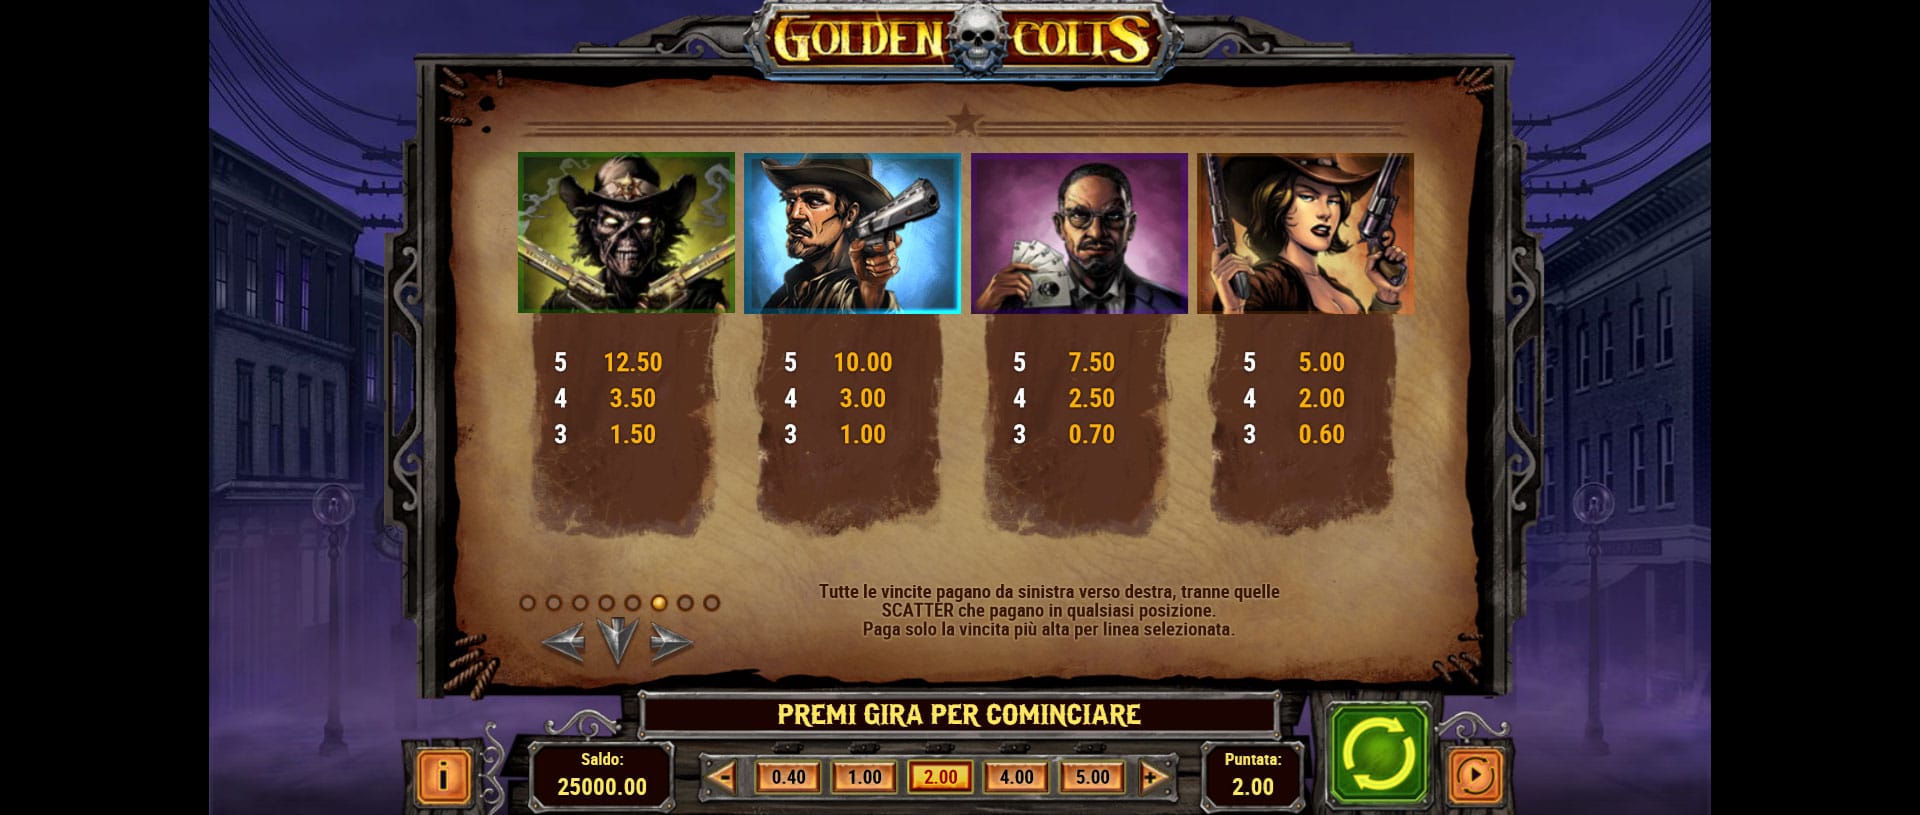 paytable della slot machine golden colts